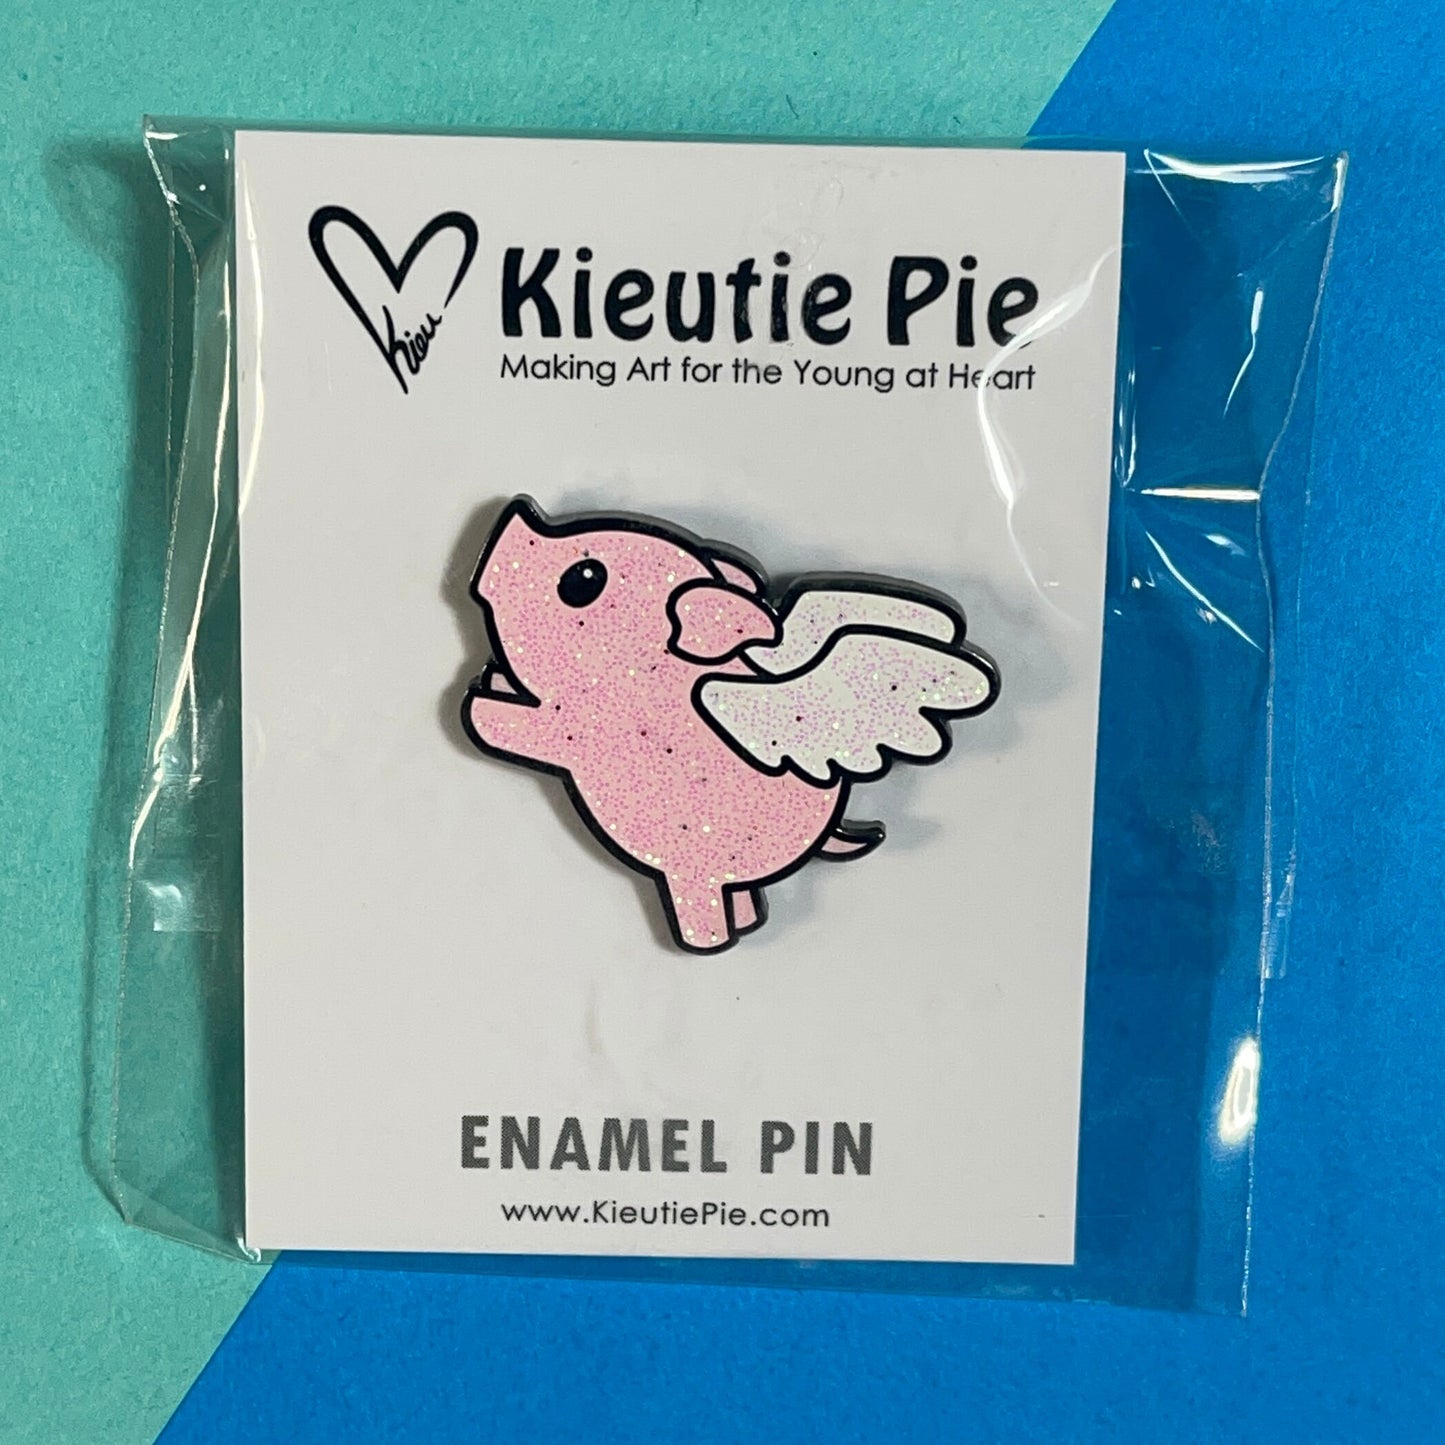 When Pigs Fly - Sparkle Pig - Glitter Hard Enamel Pin, flying pig pin, glitter pig pin, pink glitter pin, 1"